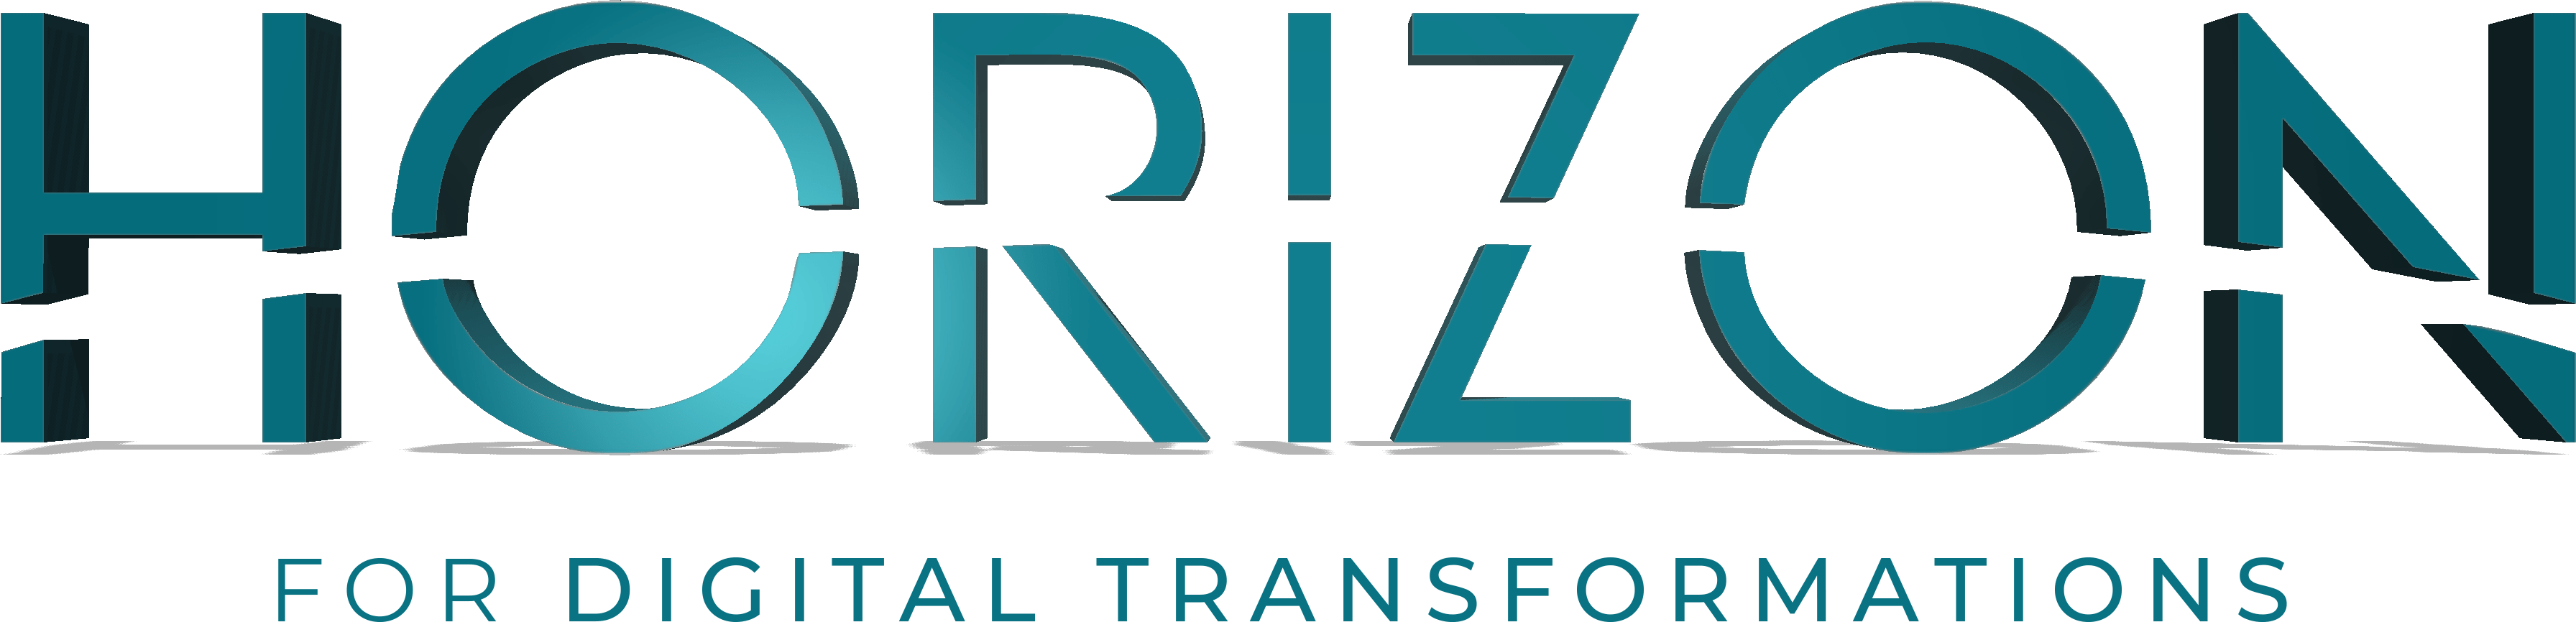 HORIZON for Digital Transformation